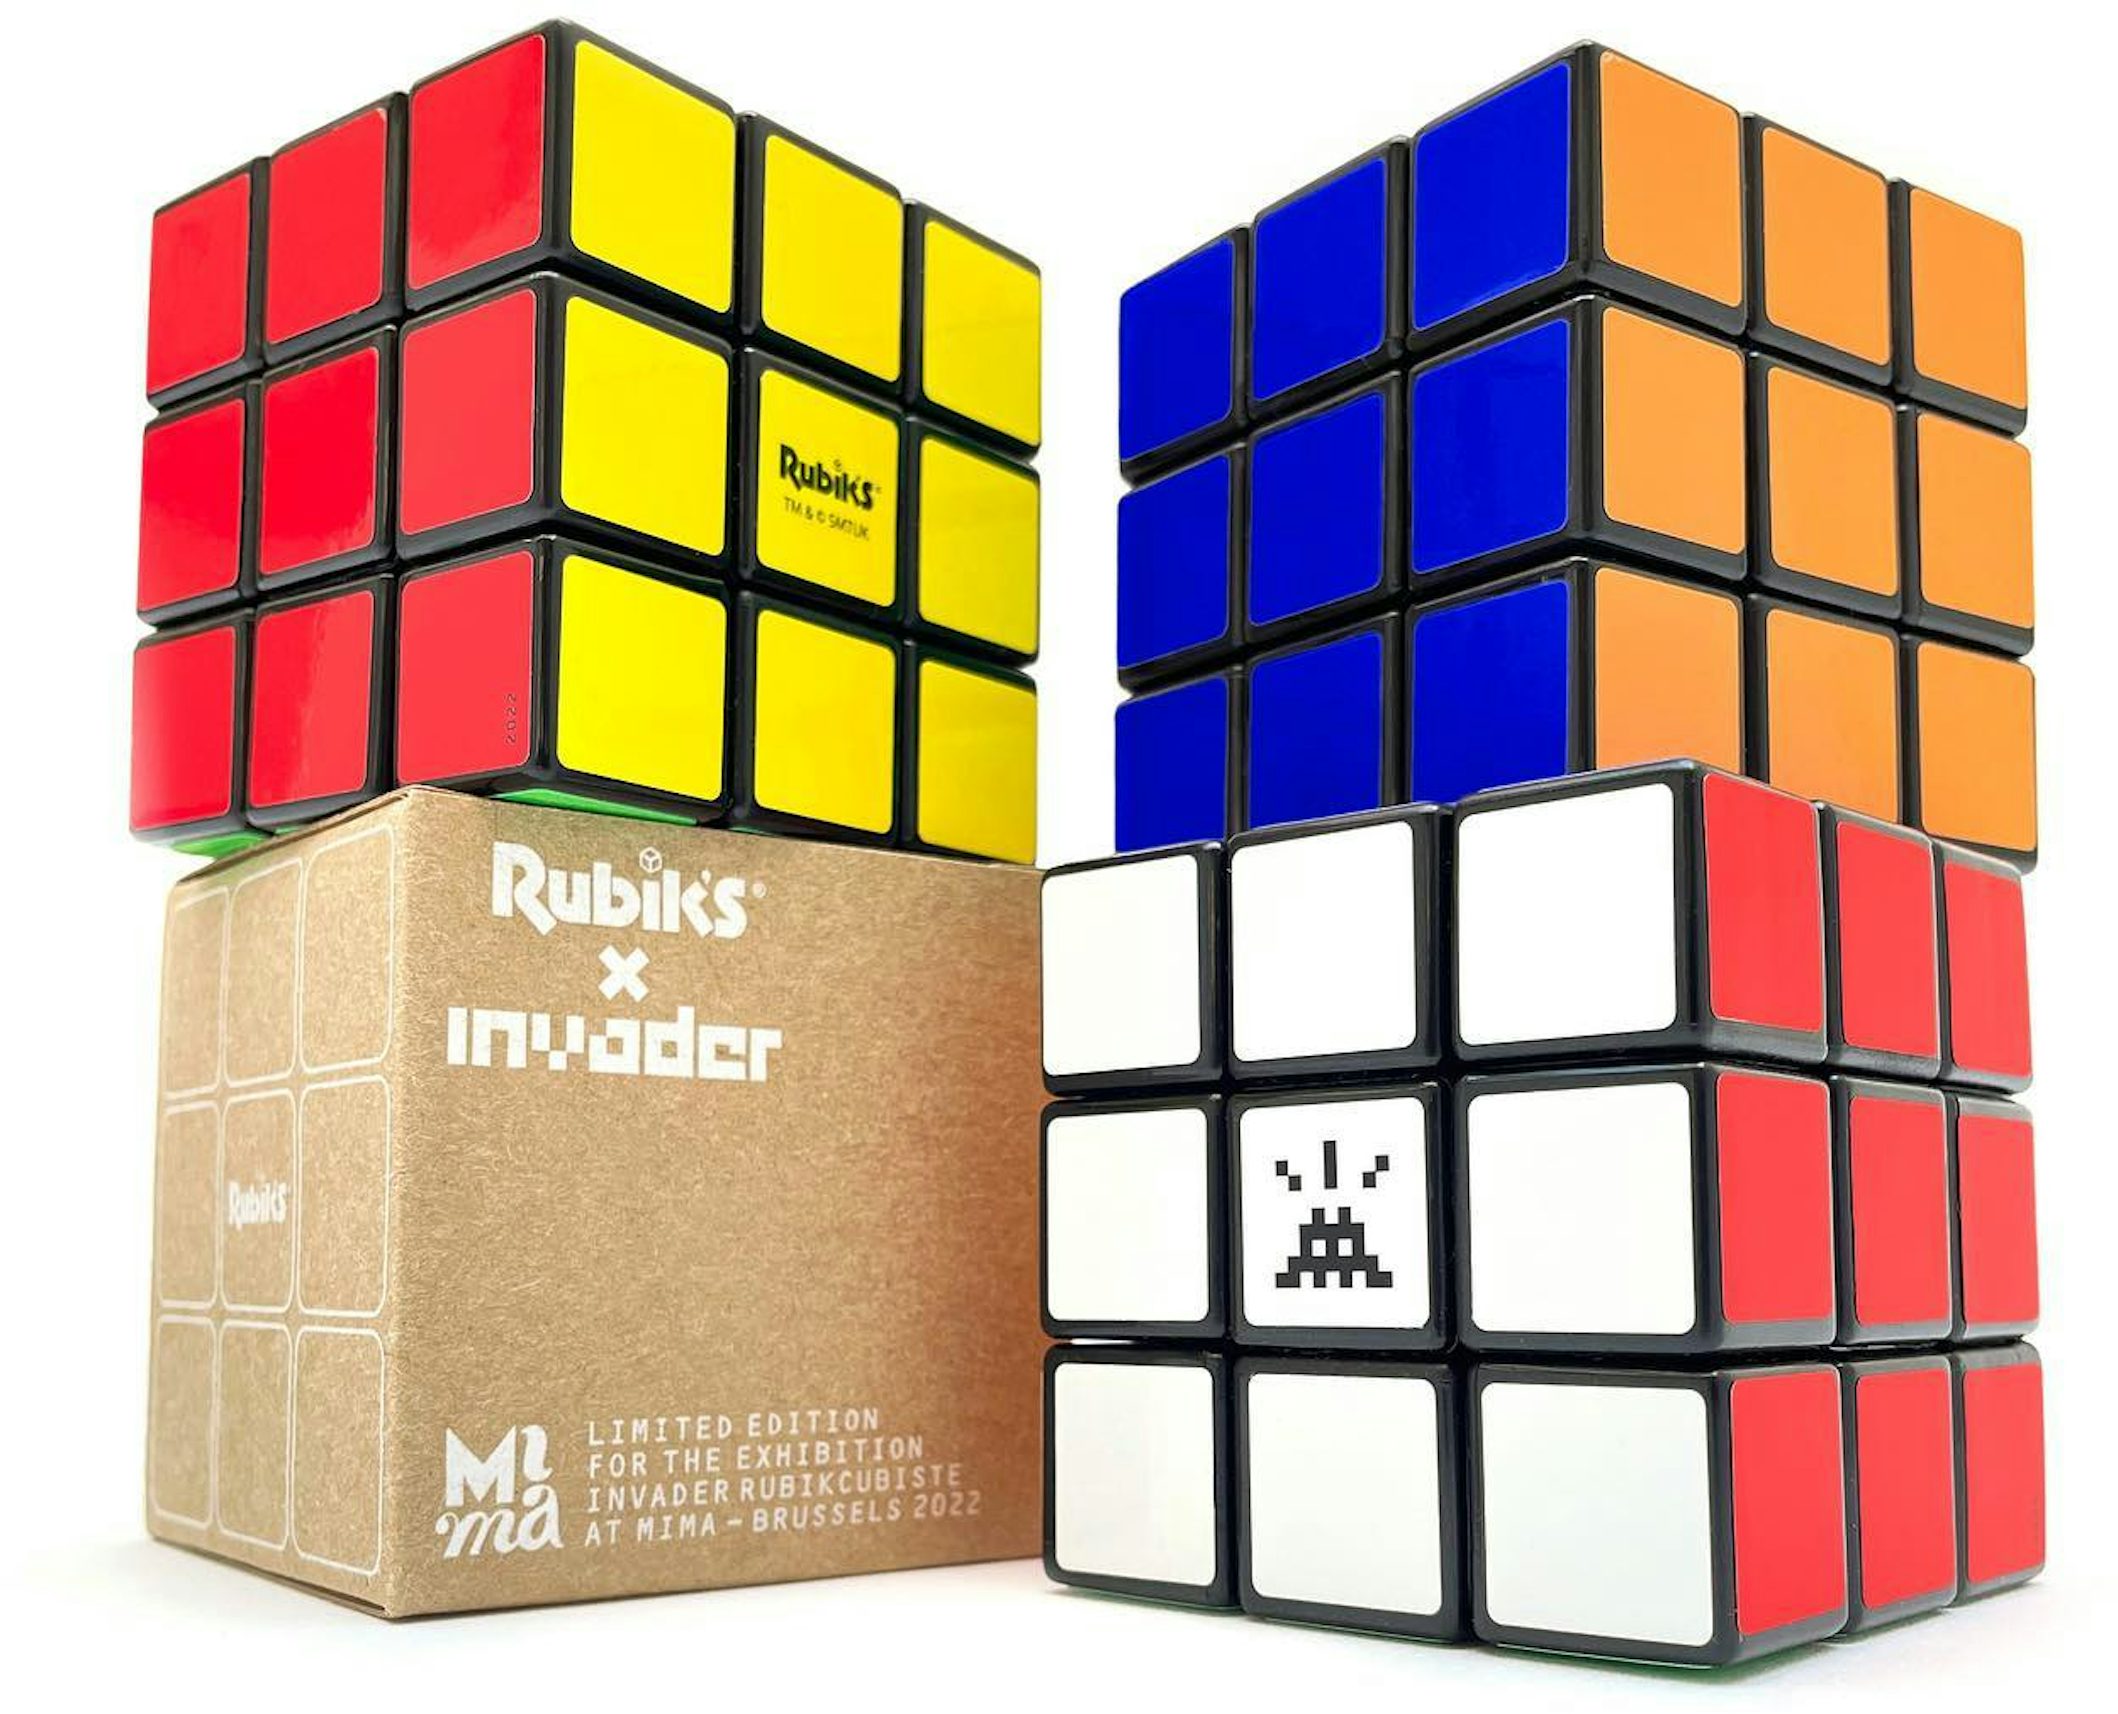 https://images.stockx.com/images/MIMA-Rubiks-x-Invader-Limited-Edition-Rubikcubist.jpg?fit=fill&bg=FFFFFF&w=1200&h=857&fm=jpg&auto=compress&dpr=2&trim=color&updated_at=1661552356&q=60